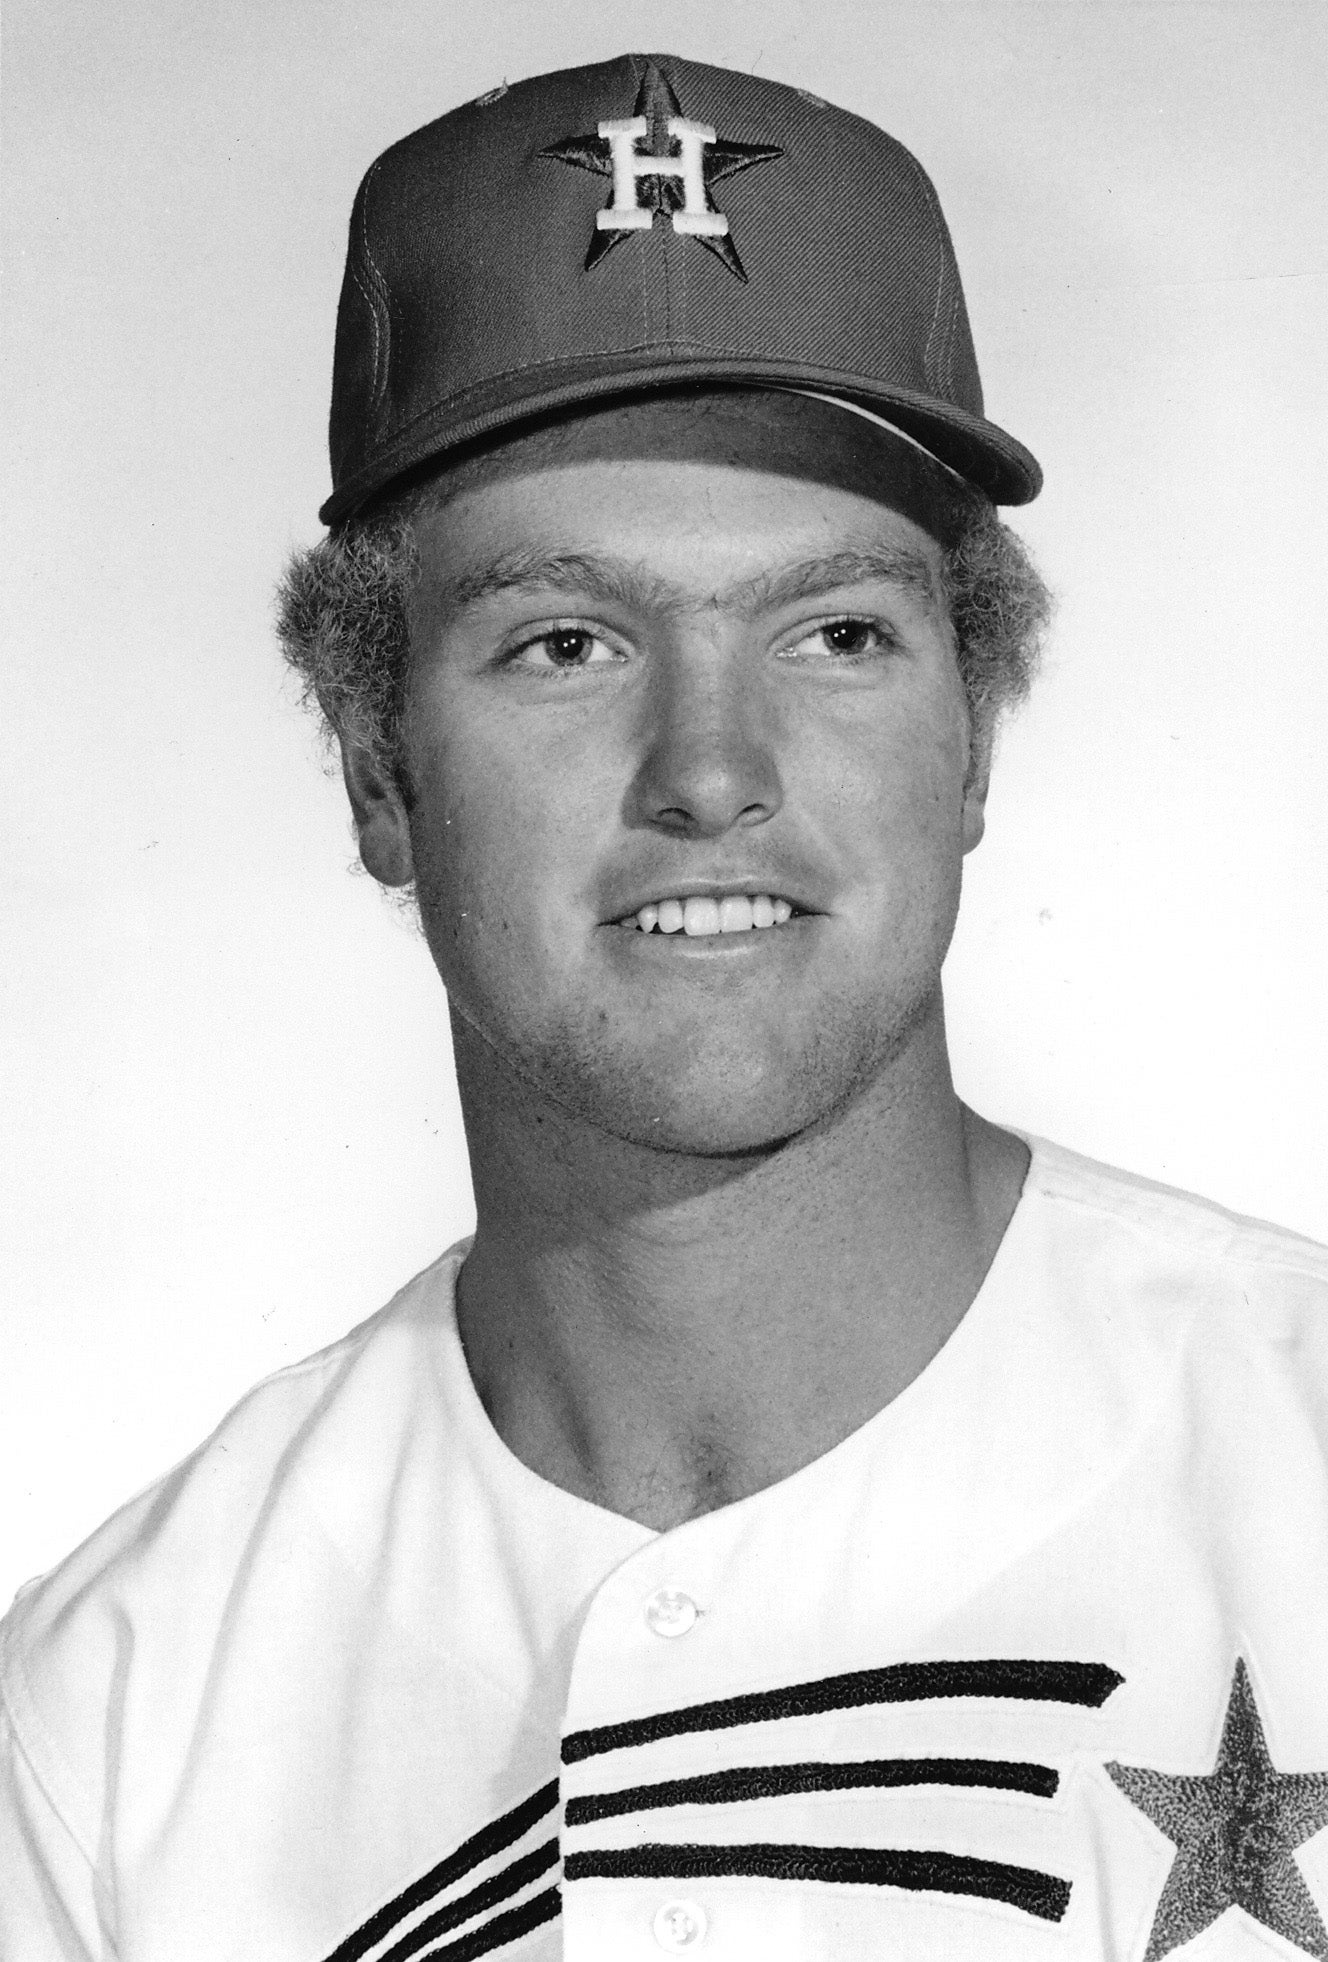 1976 Robin Yount Game Worn Milwaukee Brewers Jersey.  Baseball